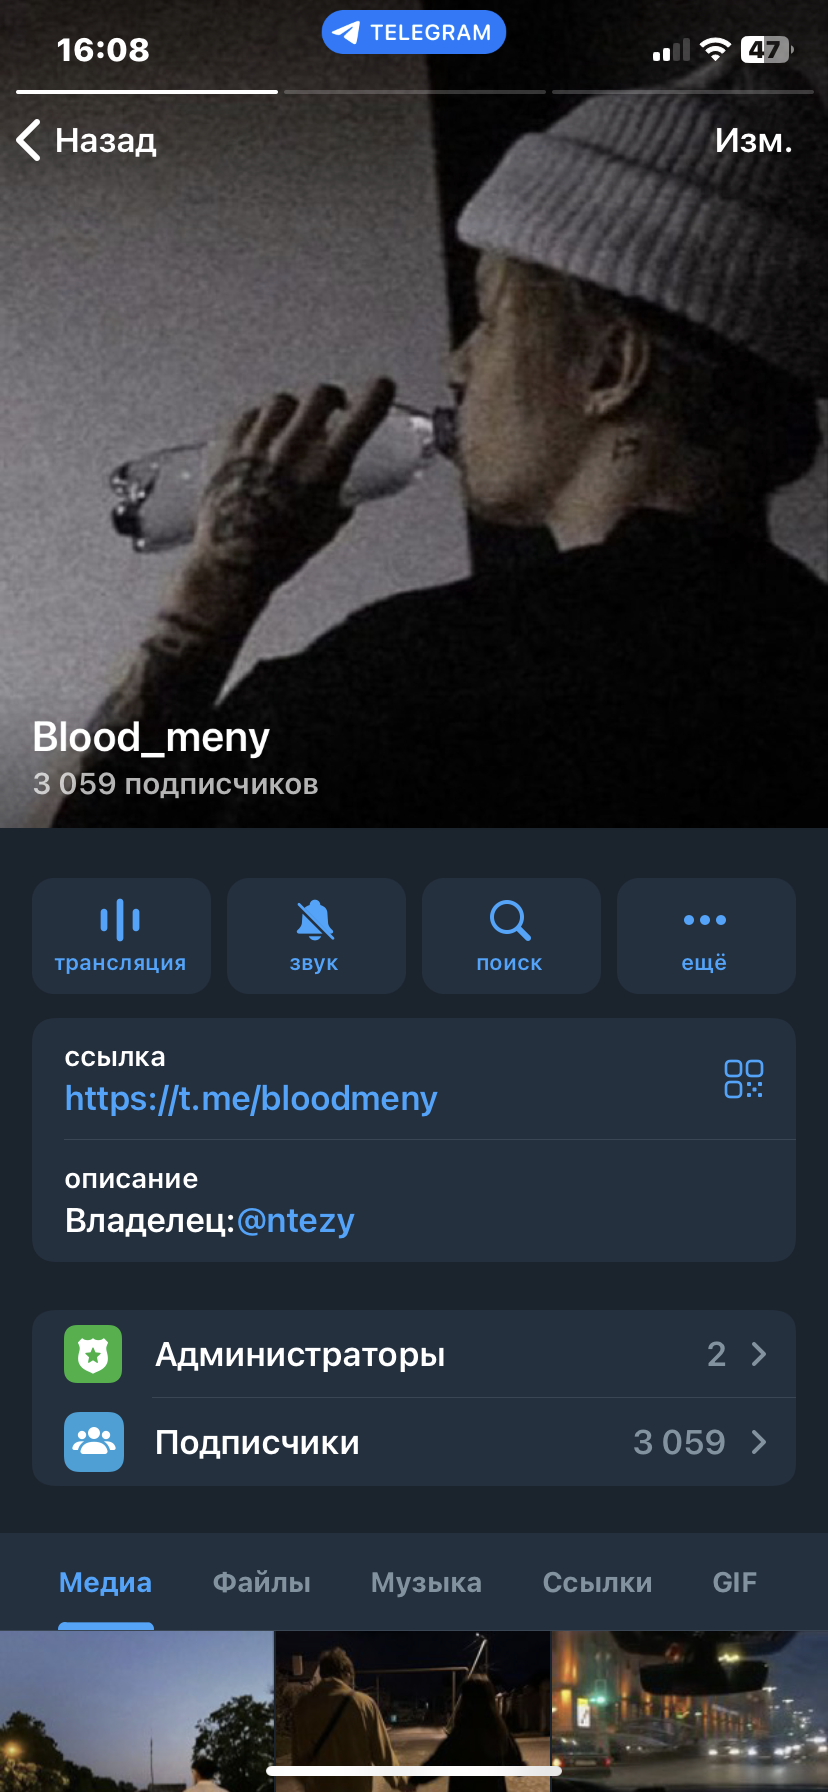 Blood_meny